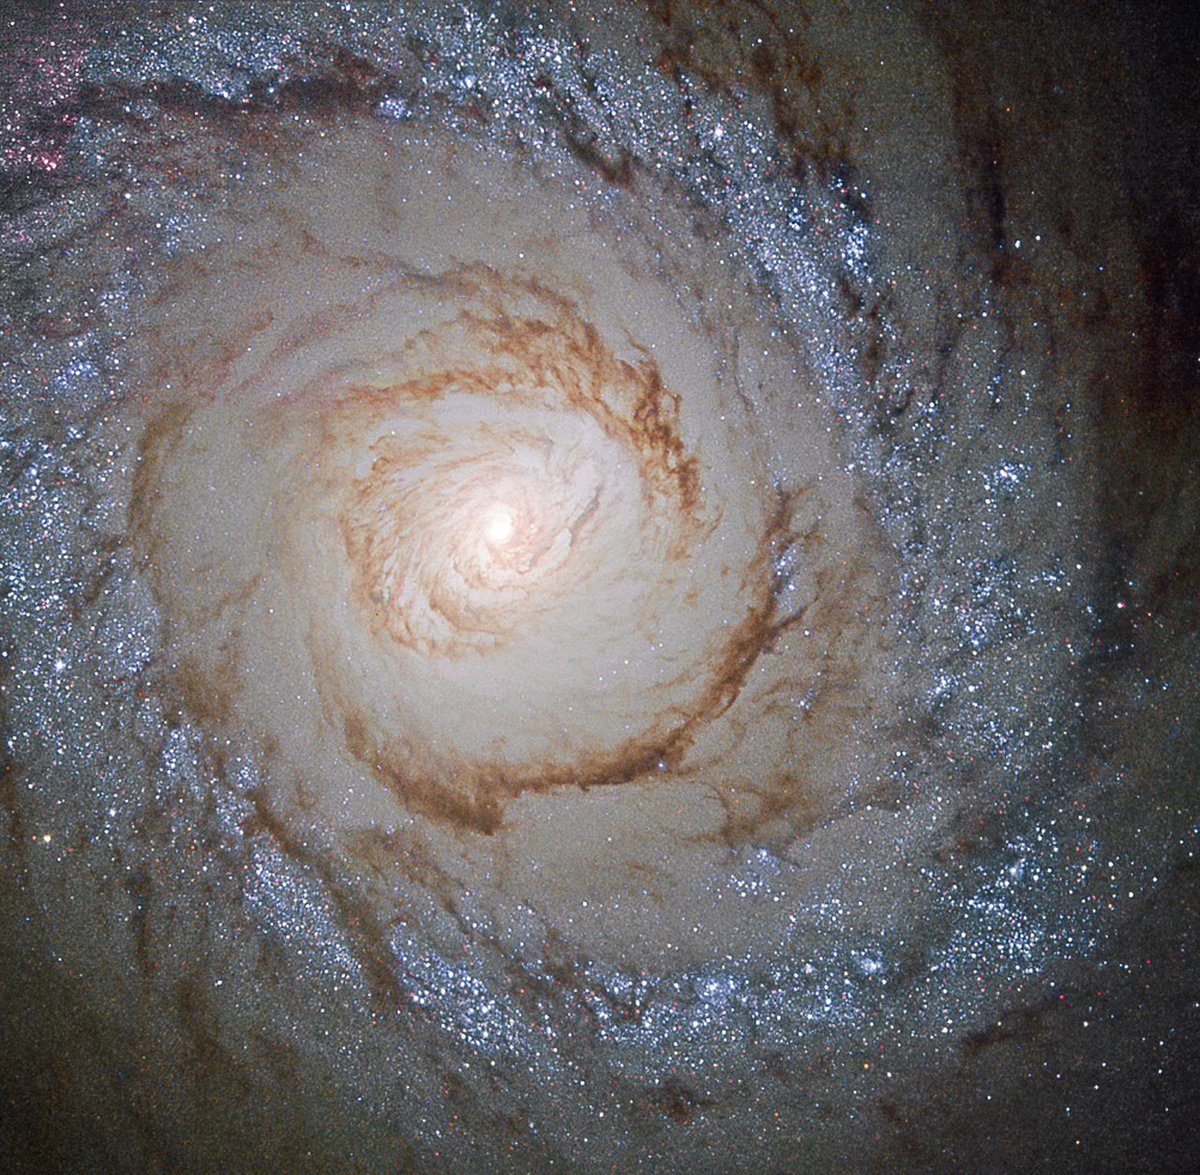 A Hubble View of Starburst Galaxy Messier 94 

(Credit: ESA, NASA)